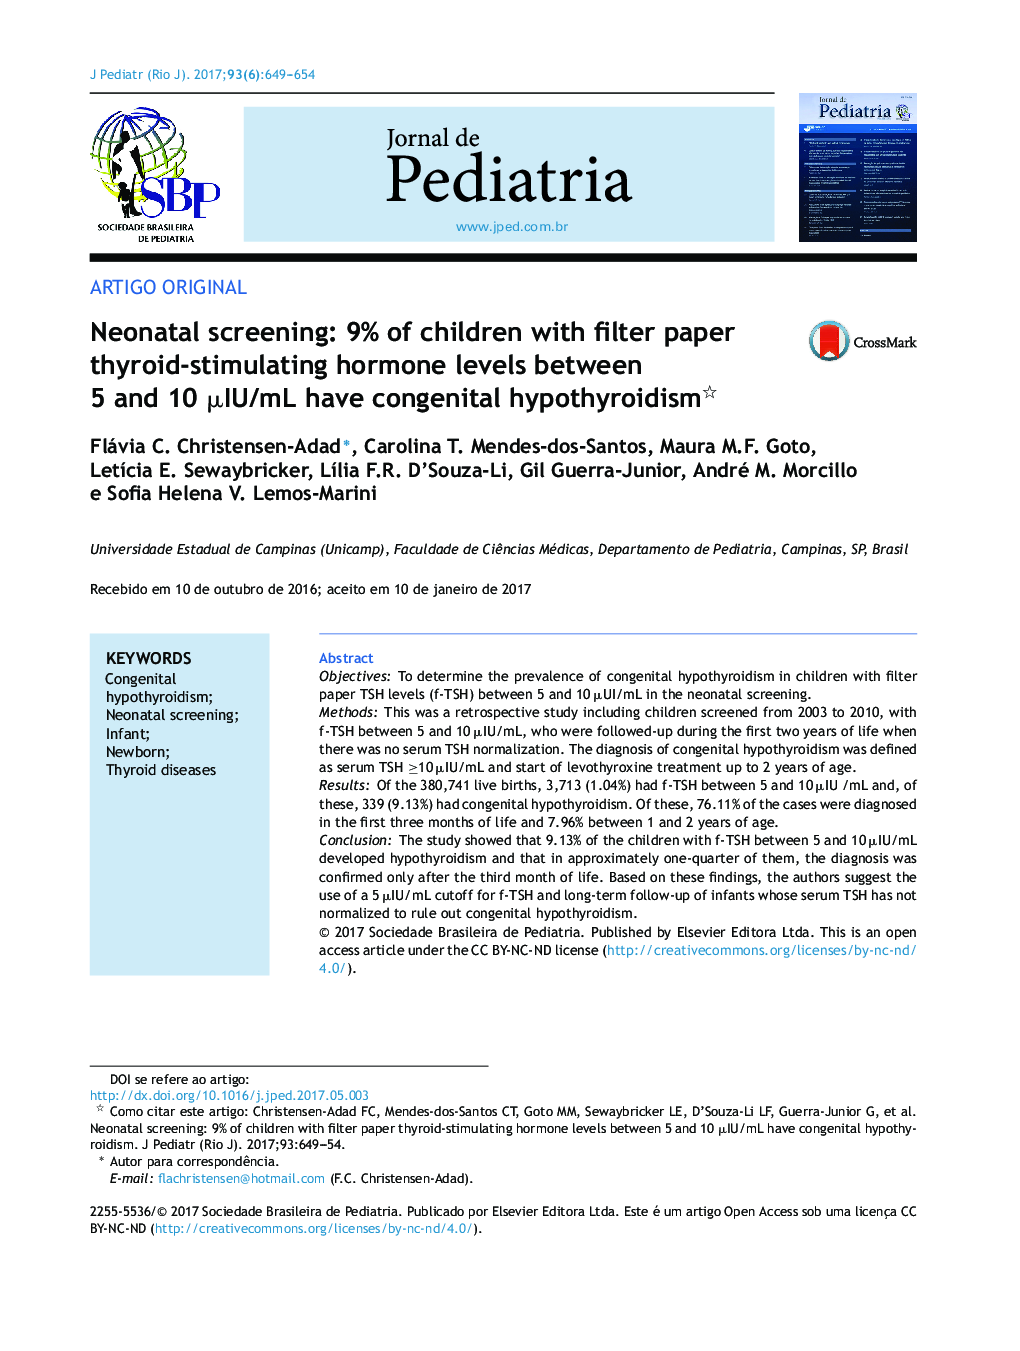 Neonatal screening: 9% of children with filter paper thyroidâstimulating hormone levels between 5 and 10 Î¼IU/mL have congenital hypothyroidism